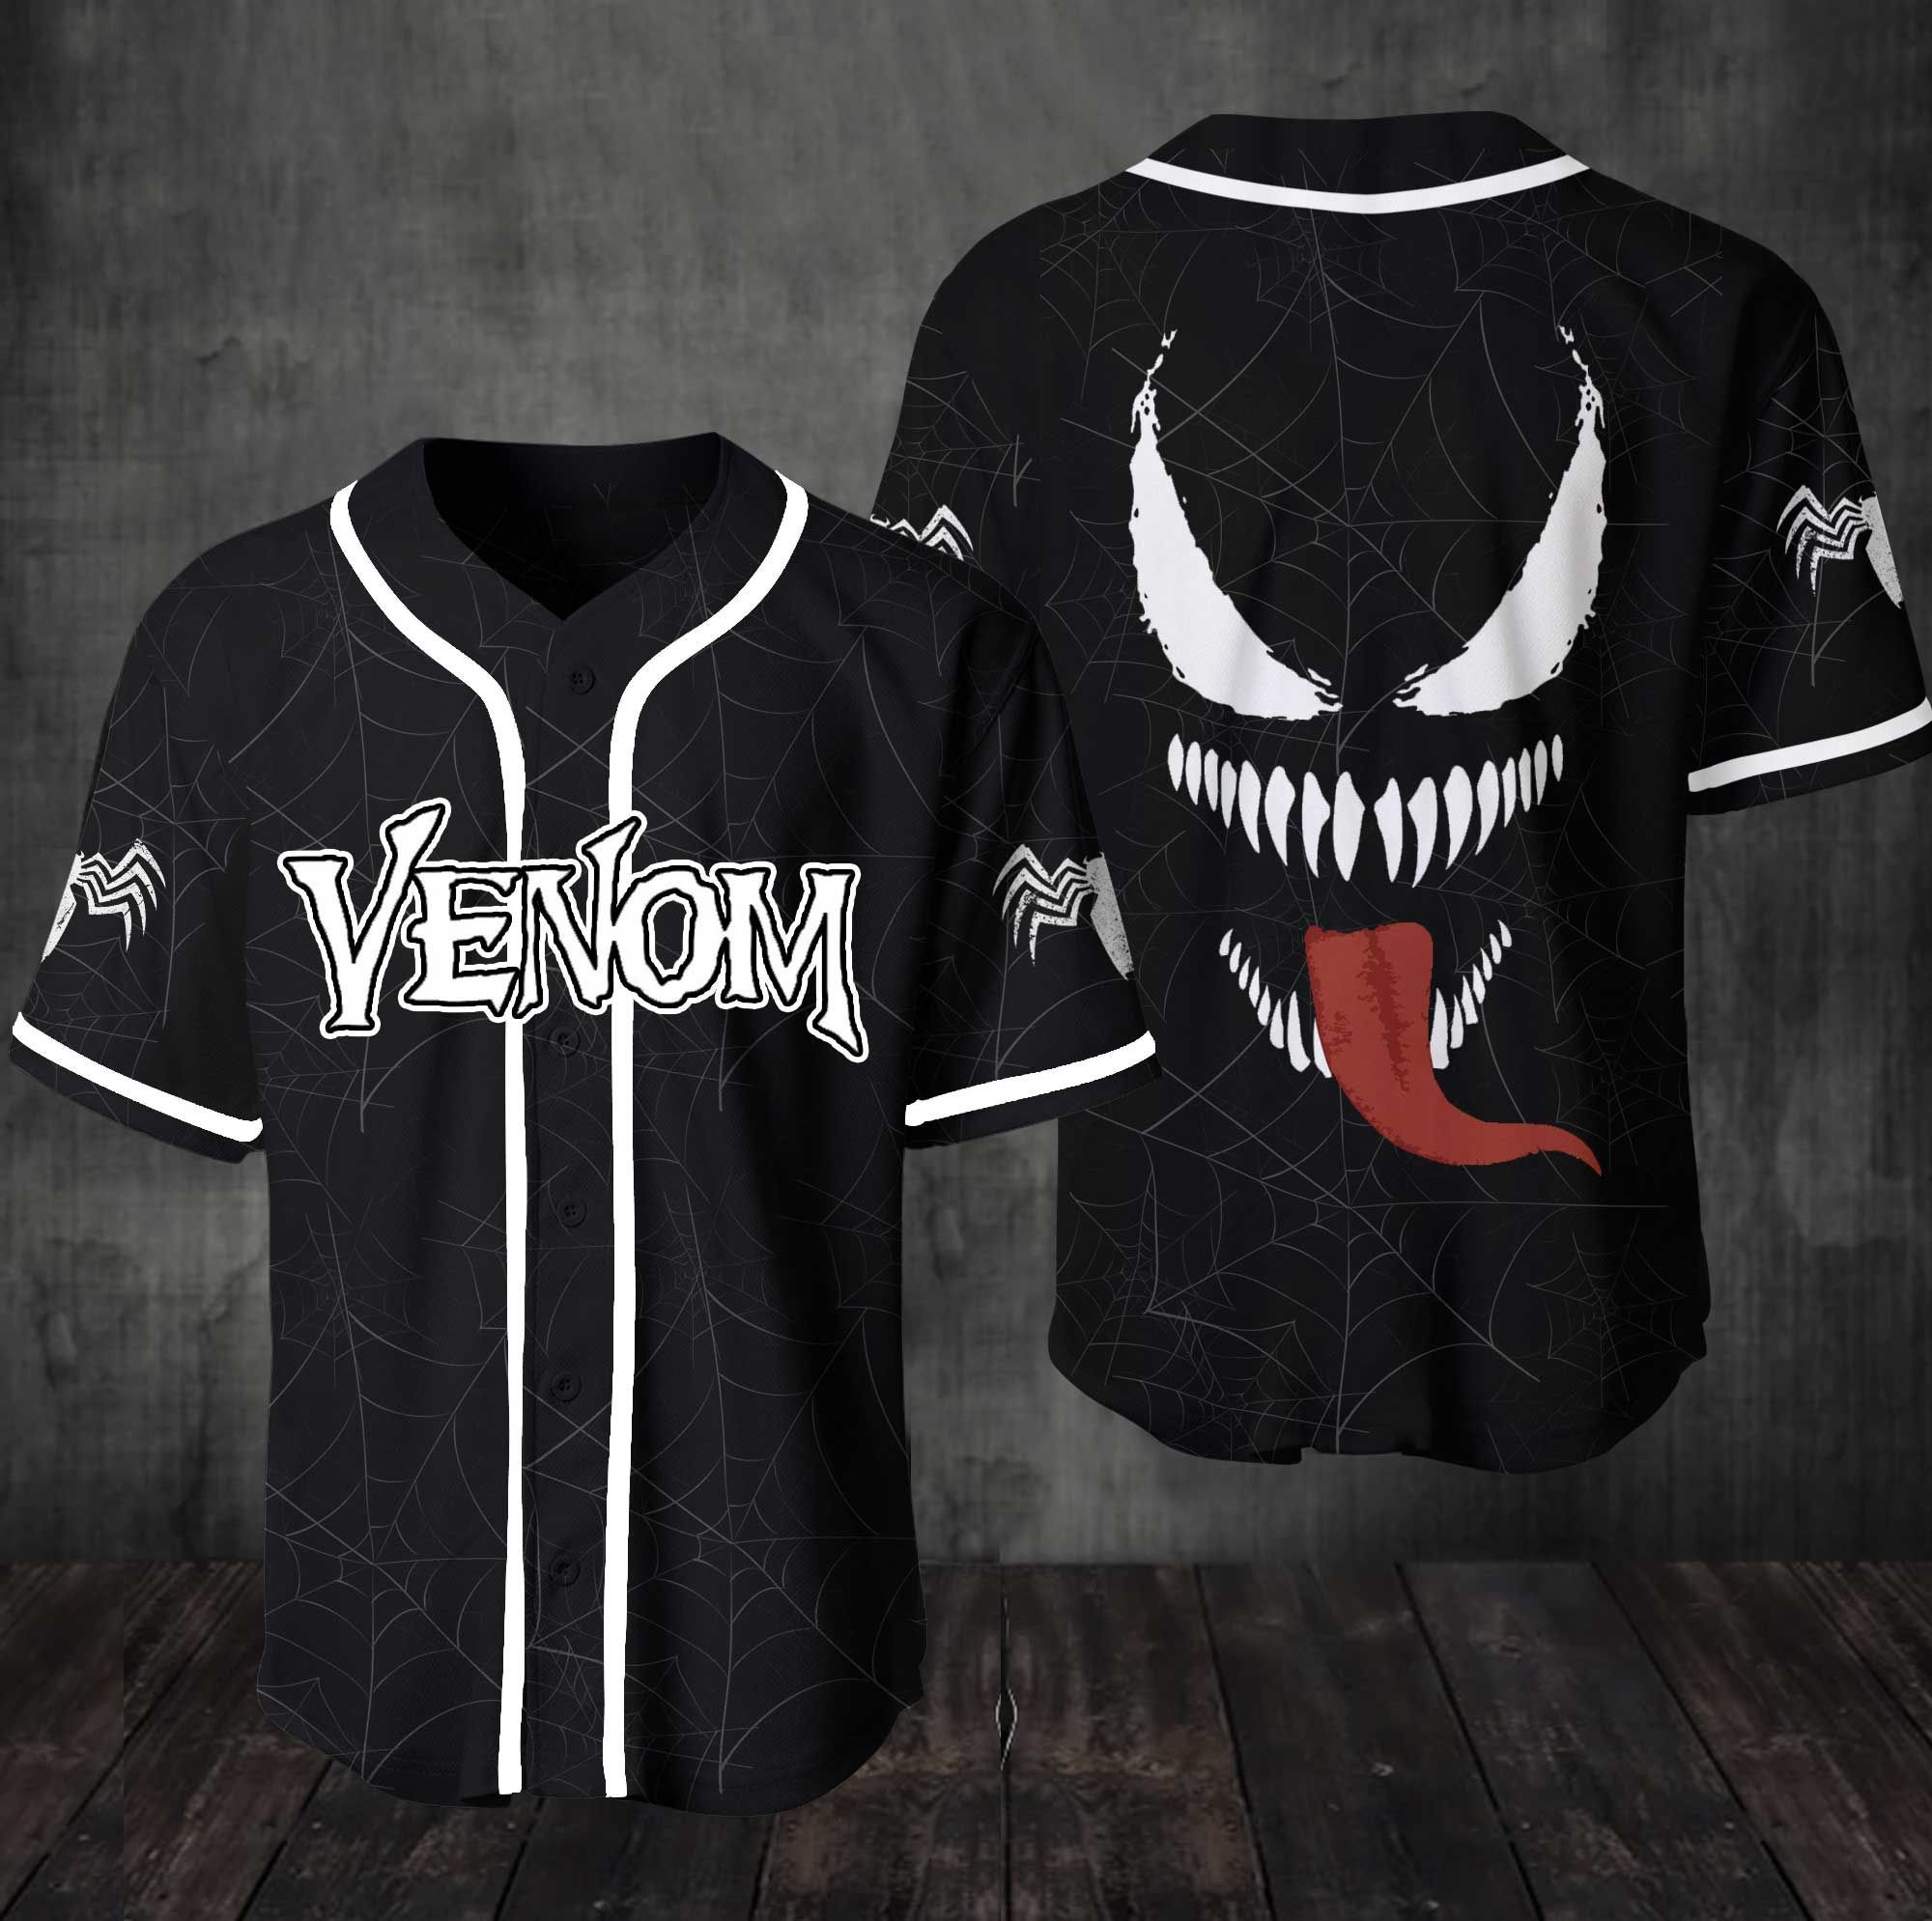 Venom baseball jersey shirt